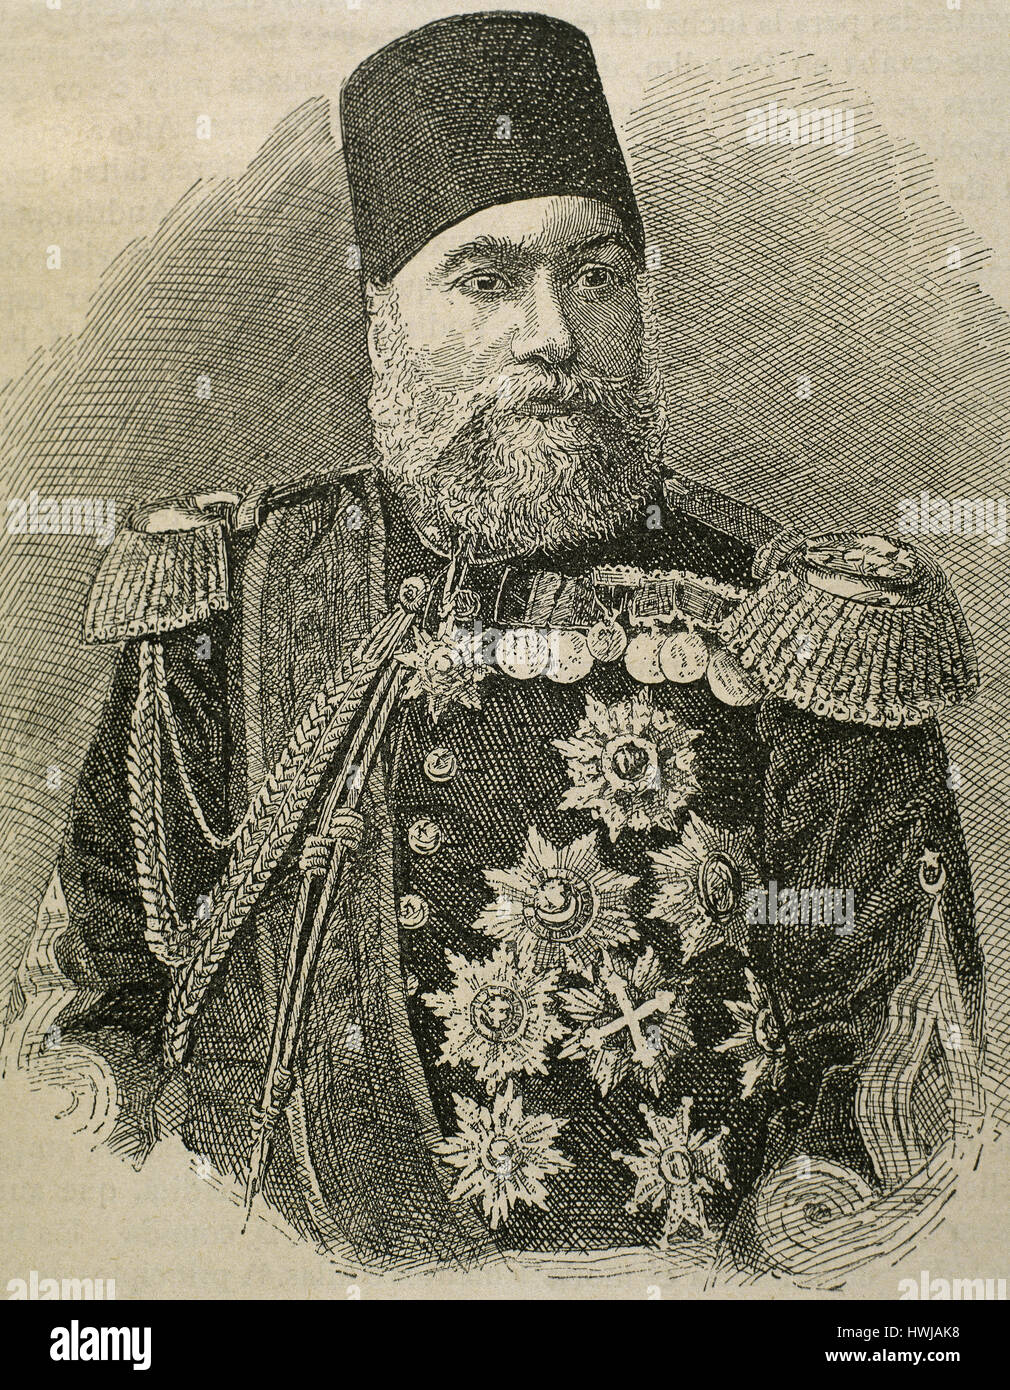 Osman Nuri Pasha, also Gazi Osman Pasha (1832-1900). Ottoman Turkish field marshal and the hero of the Siege of Plevna in 1877. Portrait. Engraving. Stock Photo